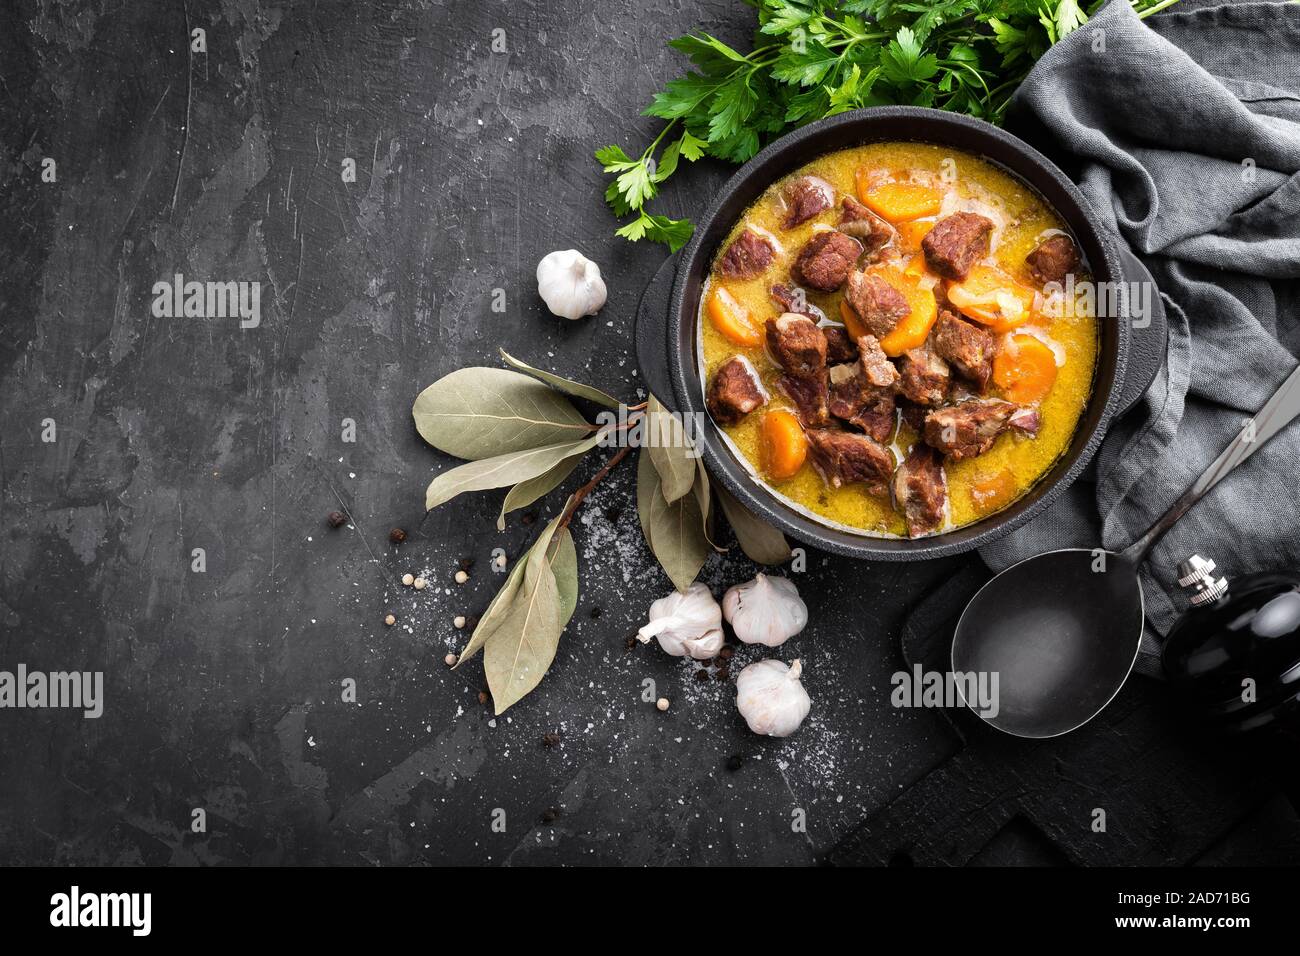 https://c8.alamy.com/comp/2AD71BG/meat-stew-goulash-in-a-cast-iron-pot-top-view-2AD71BG.jpg